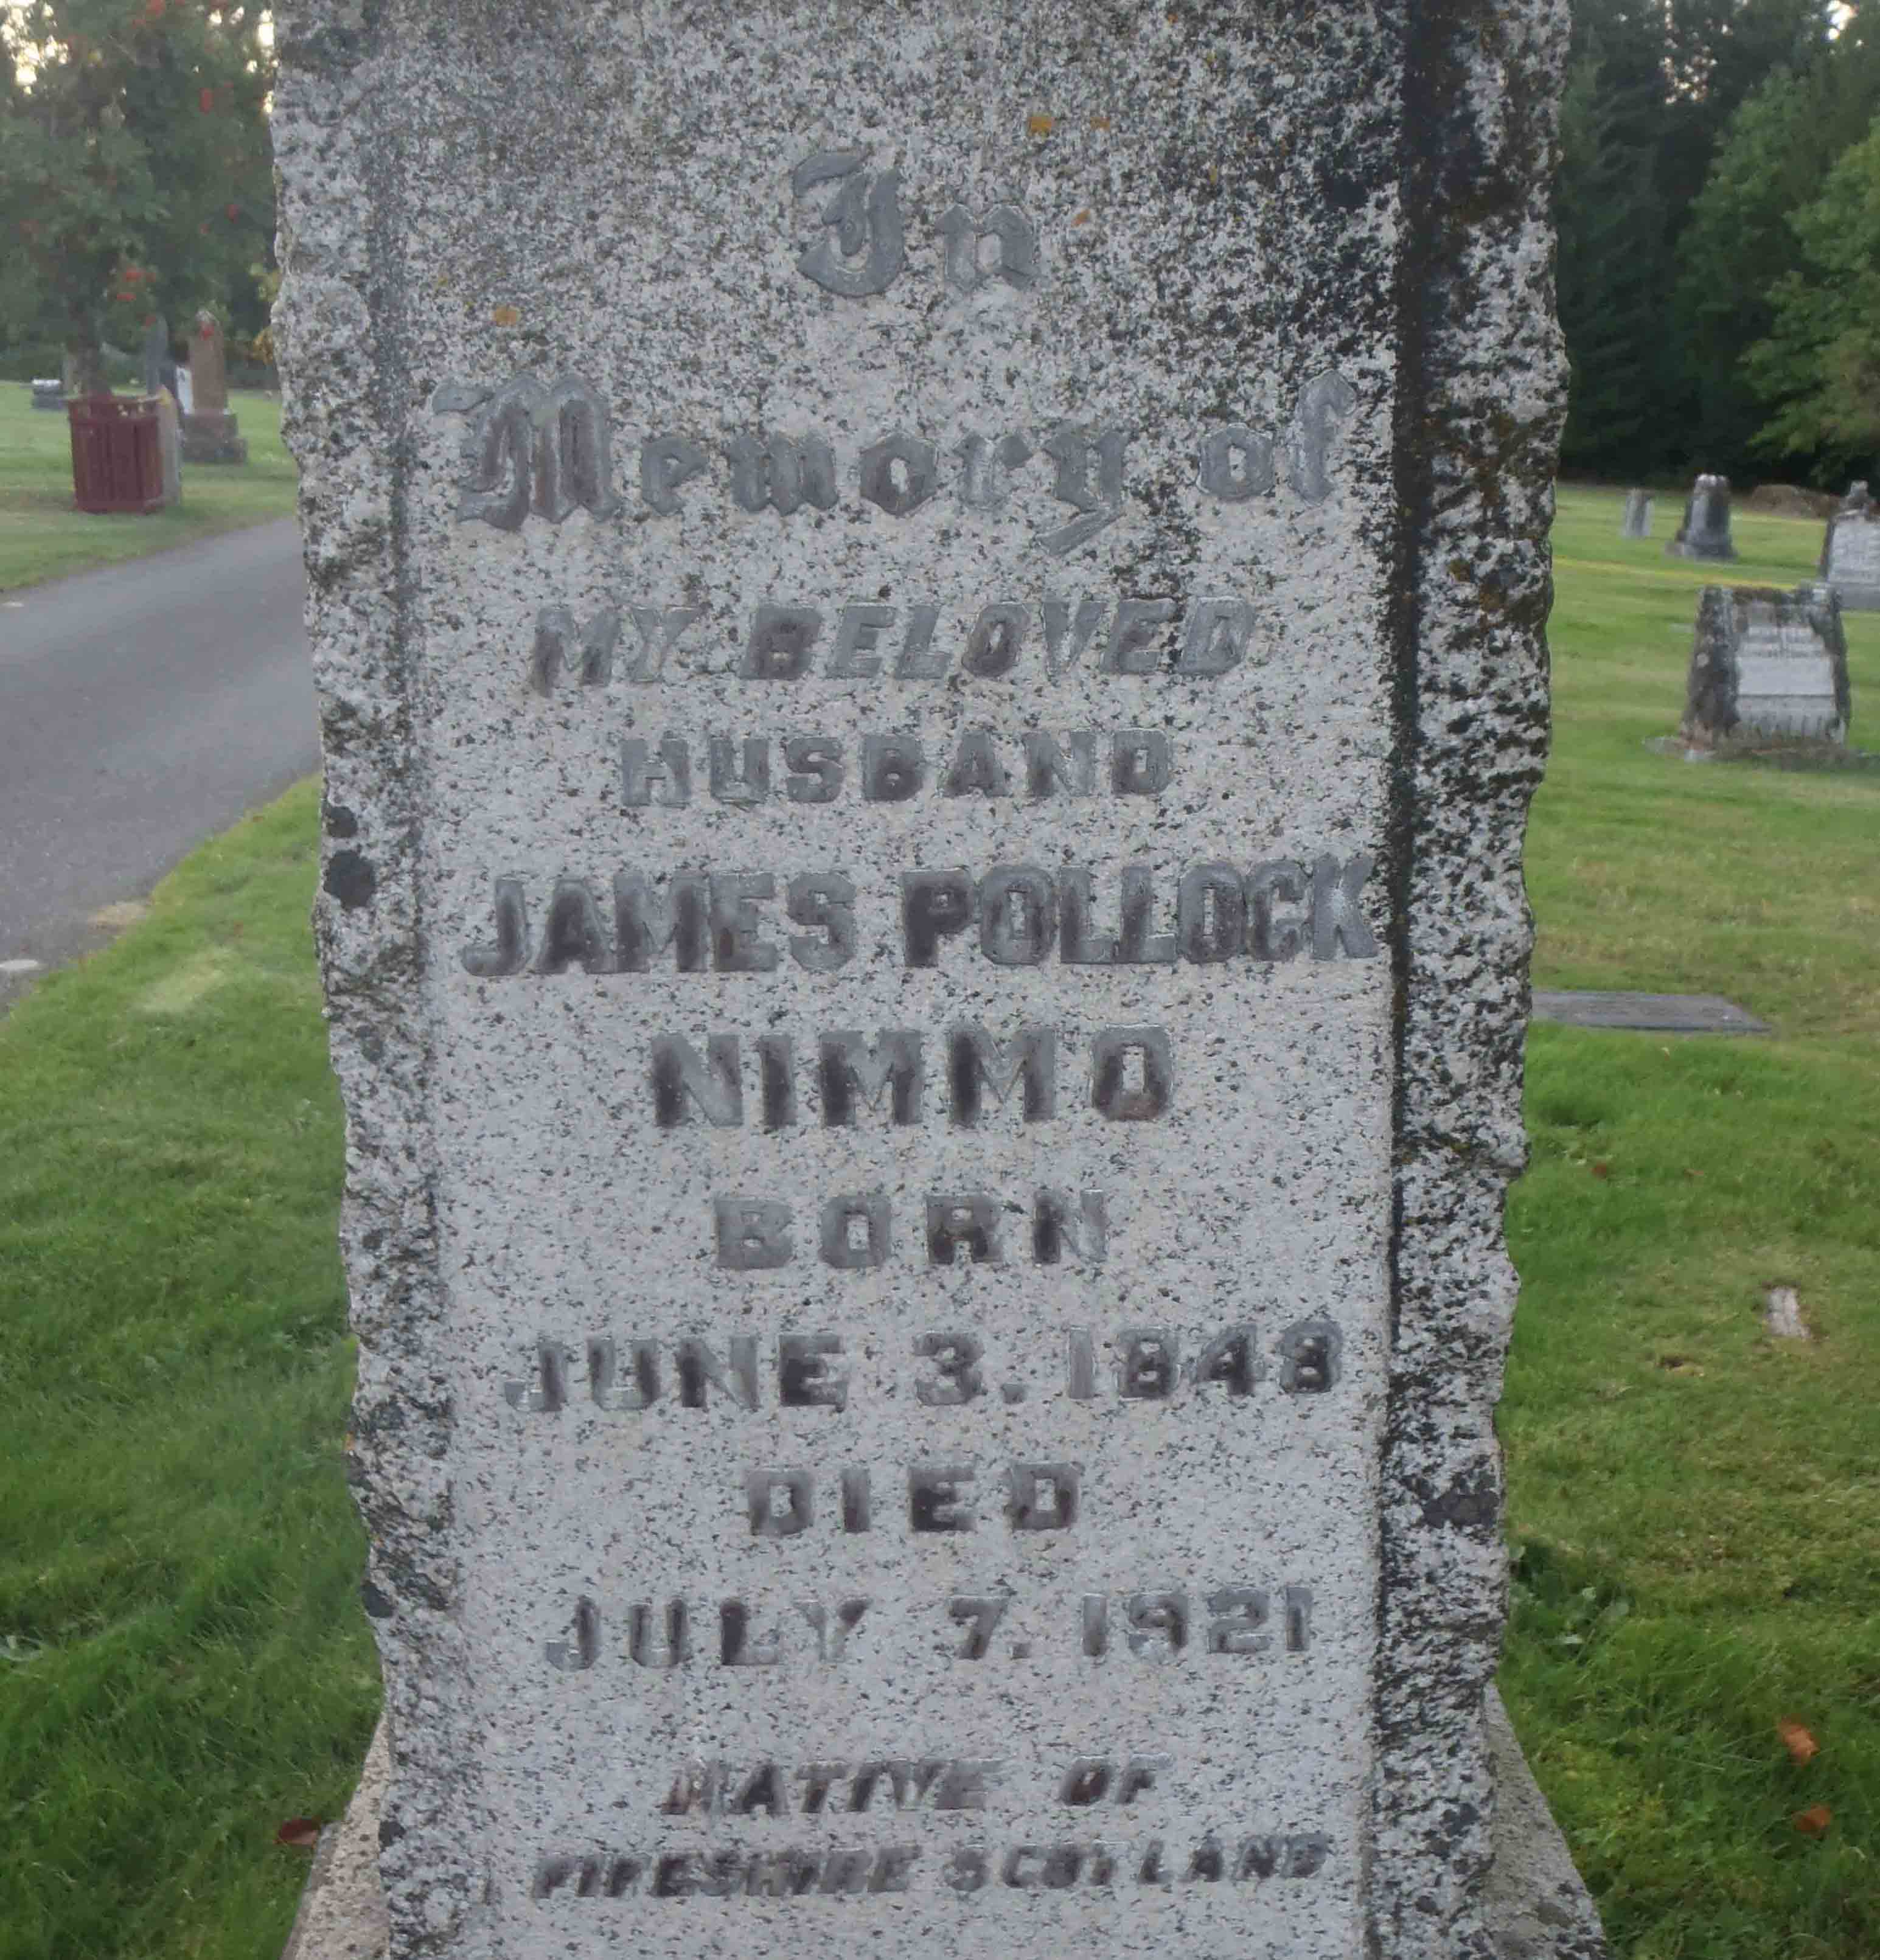 James Pollock Nimmo tomb inscription